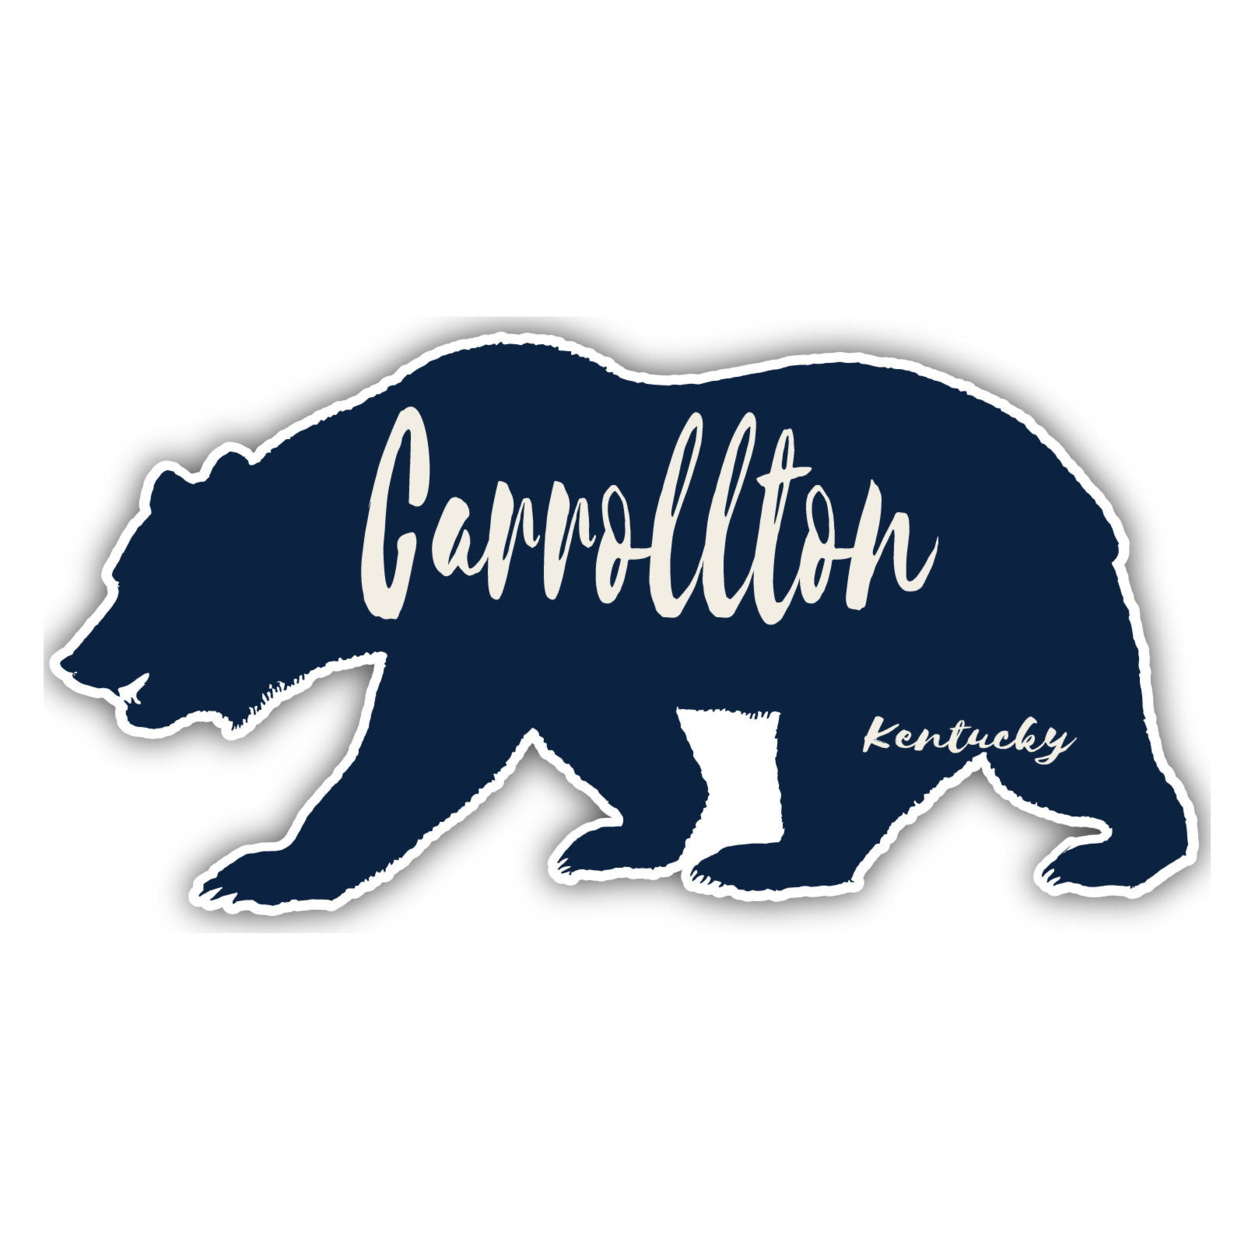 Carrollton Kentucky Souvenir Decorative Stickers (Choose Theme And Size) - Single Unit, 12-Inch, Great Outdoors